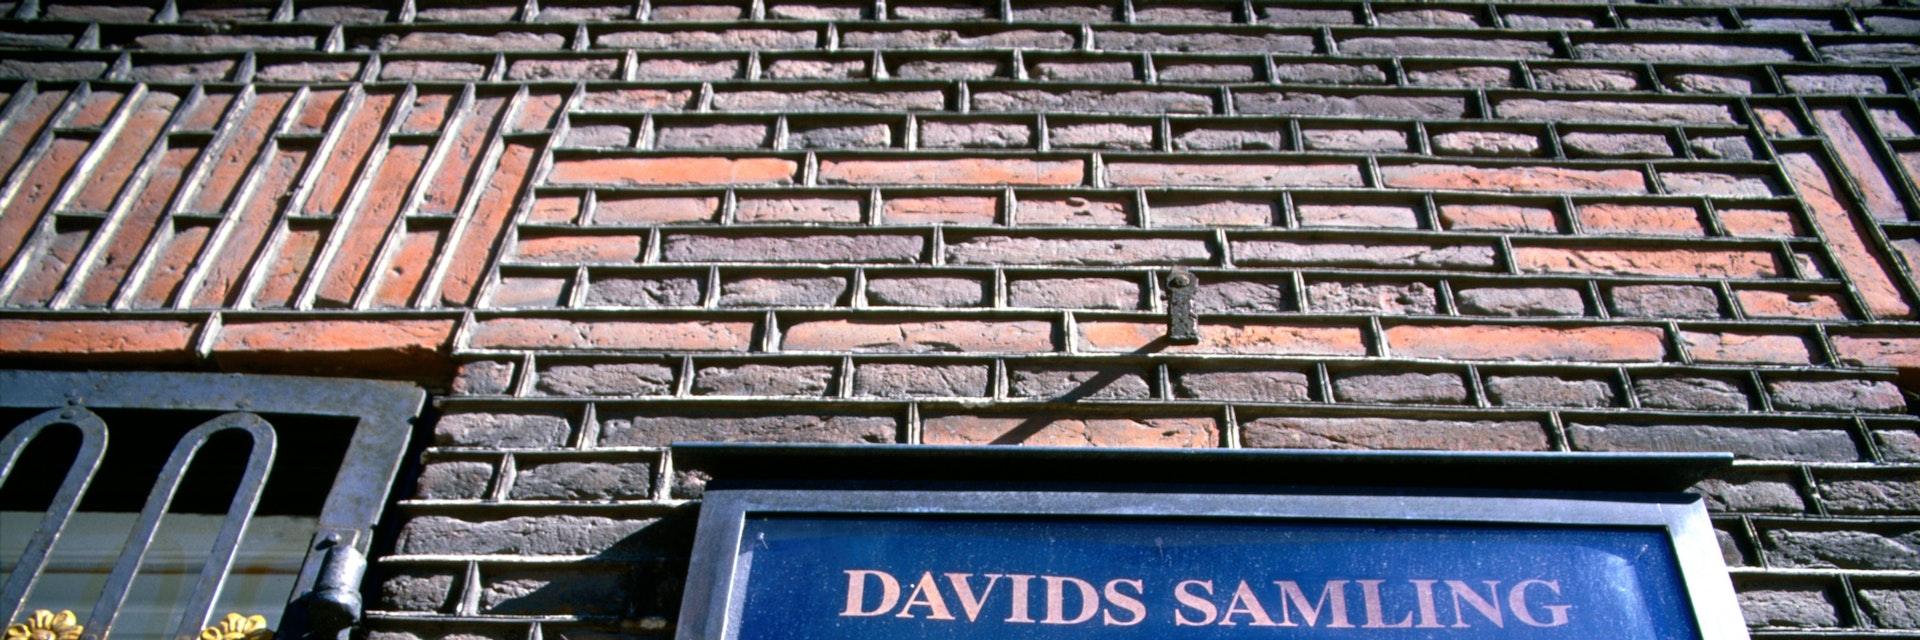 Poster on building housing Davids Samling.